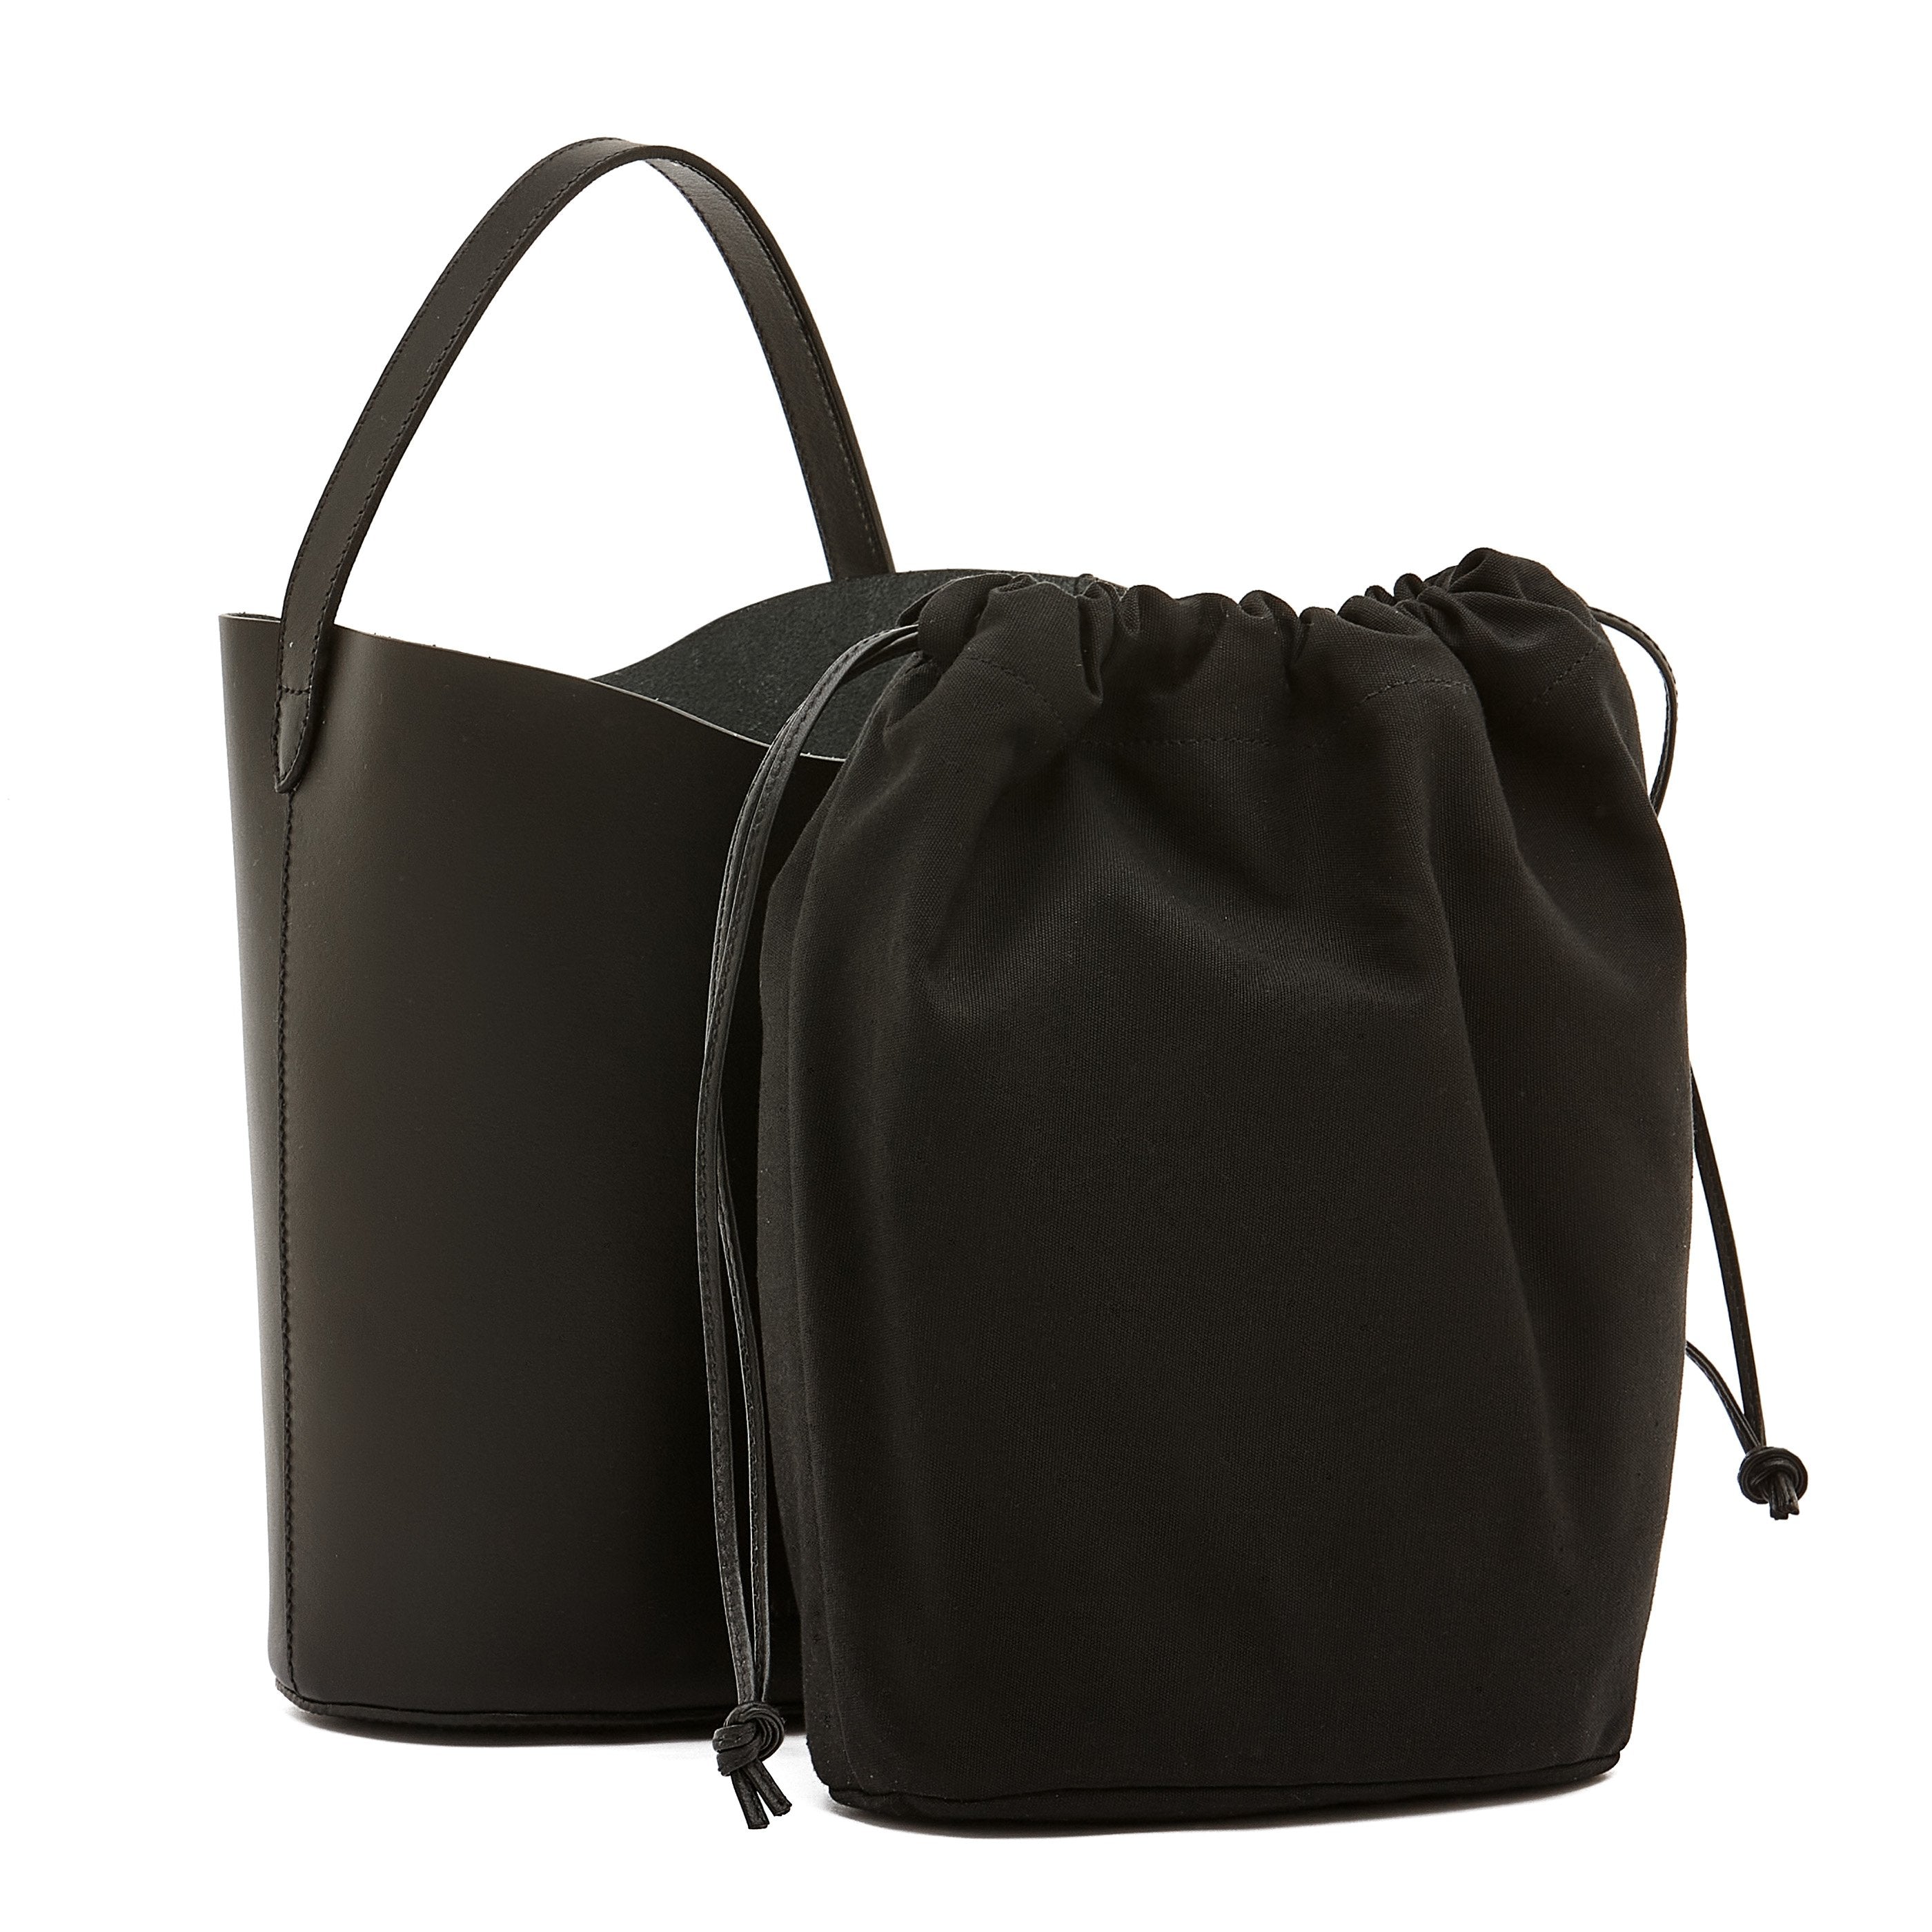 Roseto | Women's bucket bag in leather color black